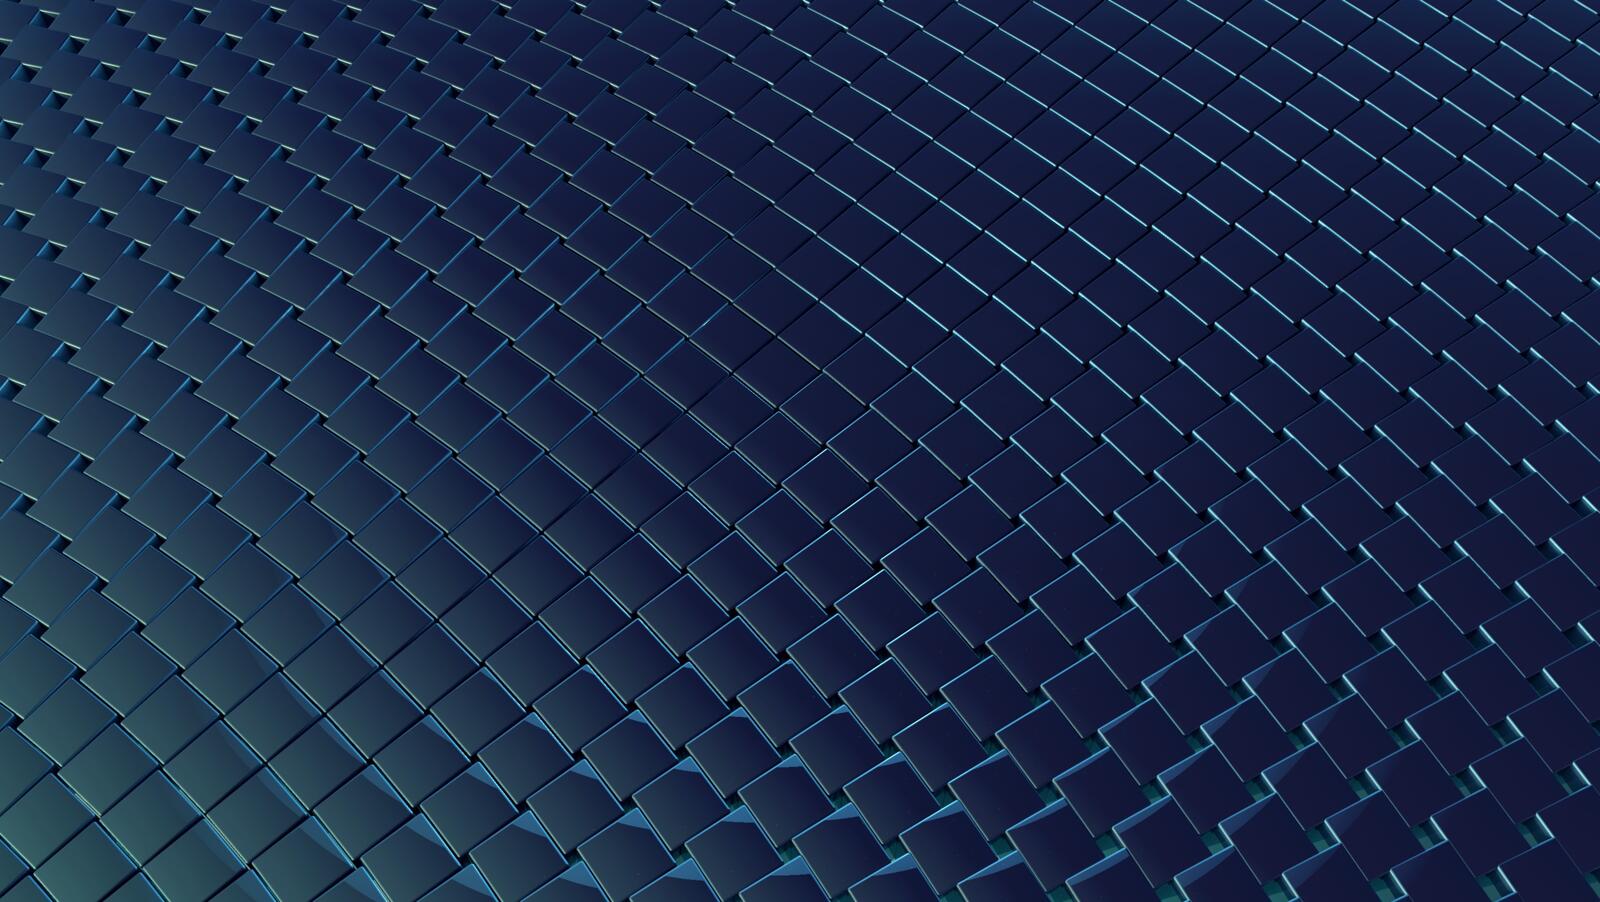 Wallpapers cube sea geometry location on the desktop